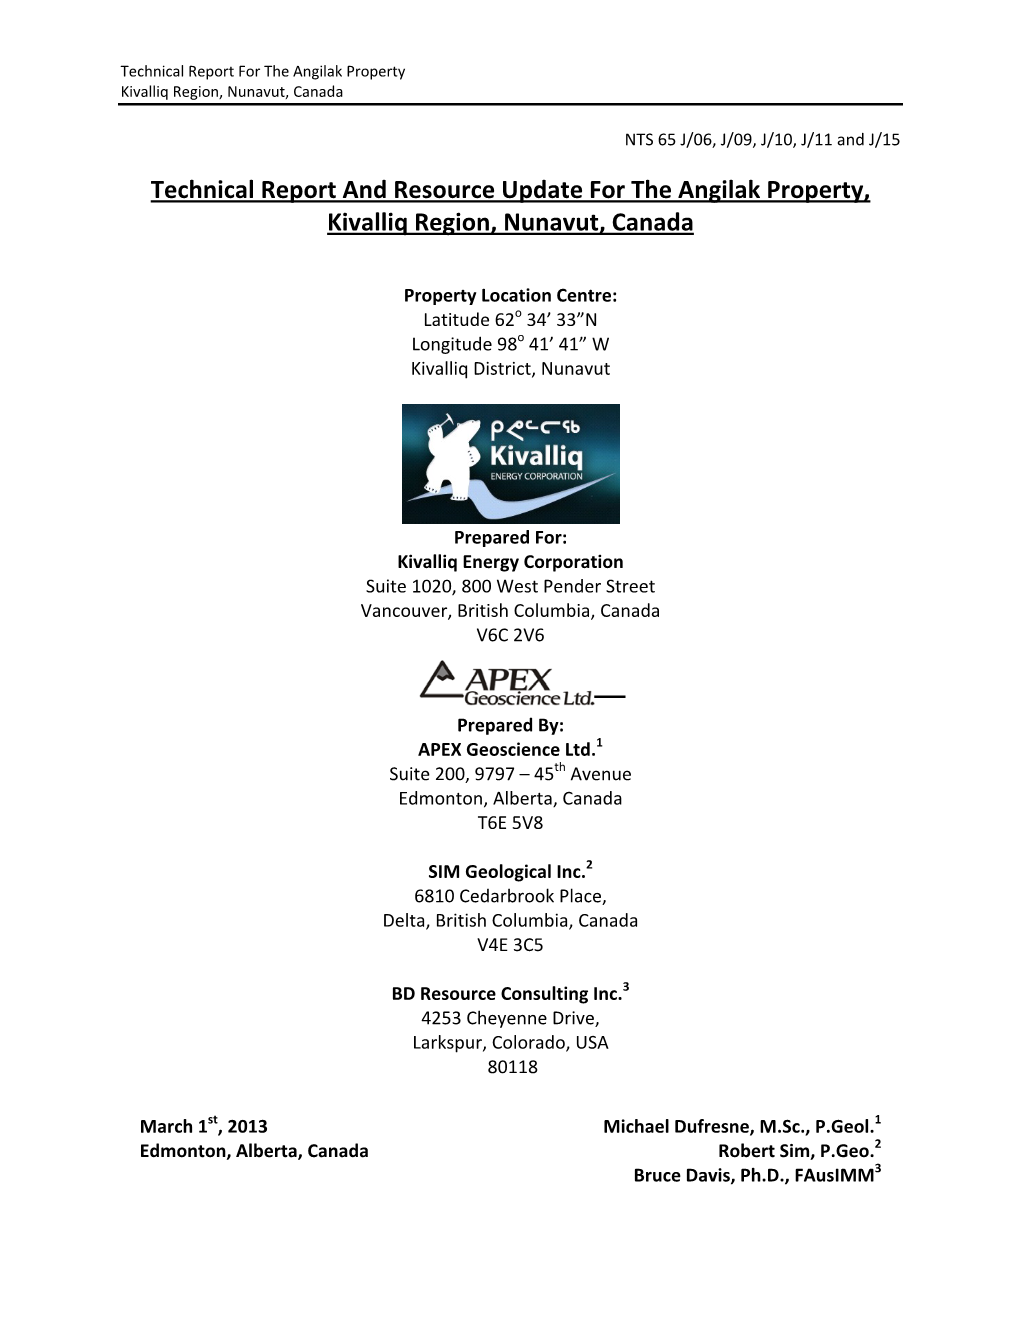 Technical Report and Resource Update for the Angilak Property, Kivalliq Region, Nunavut, Canada